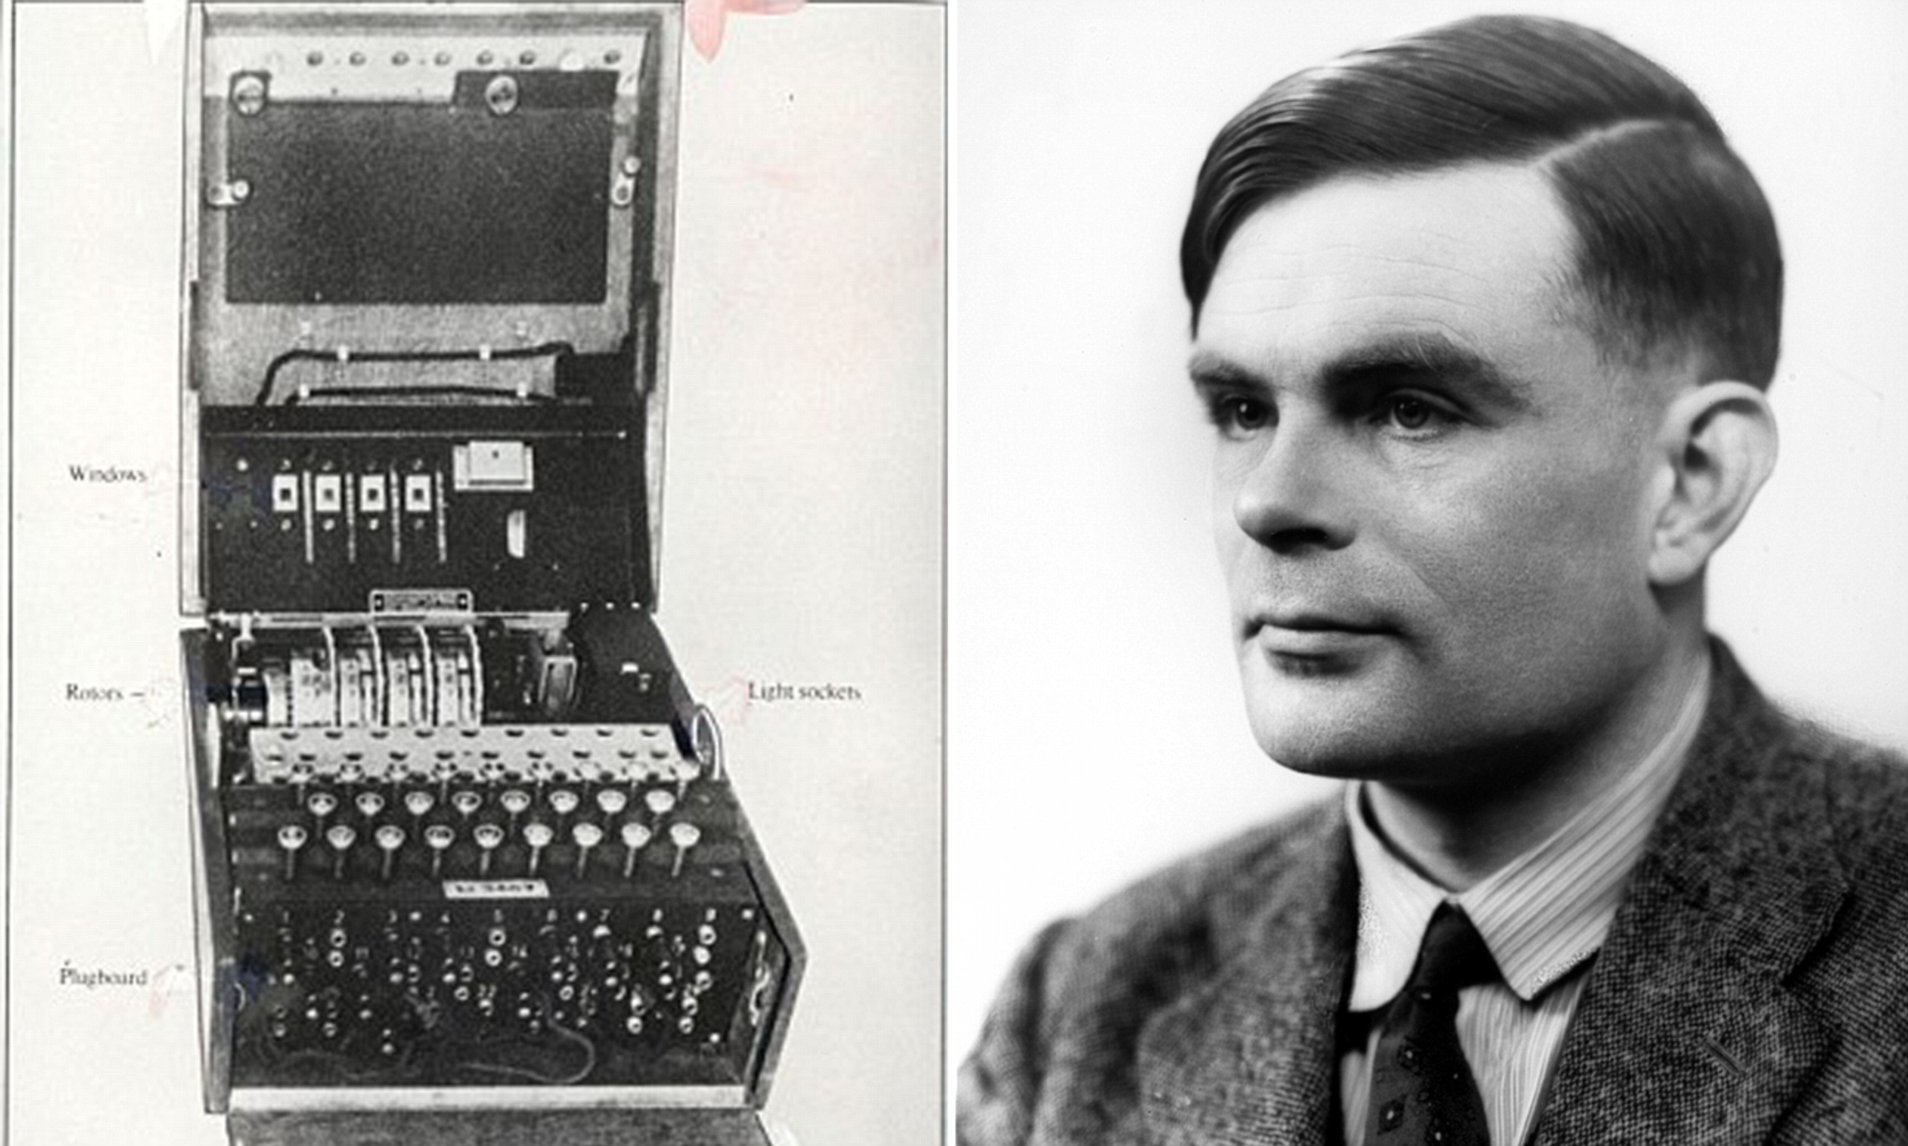 Alan Turing's The Bombe